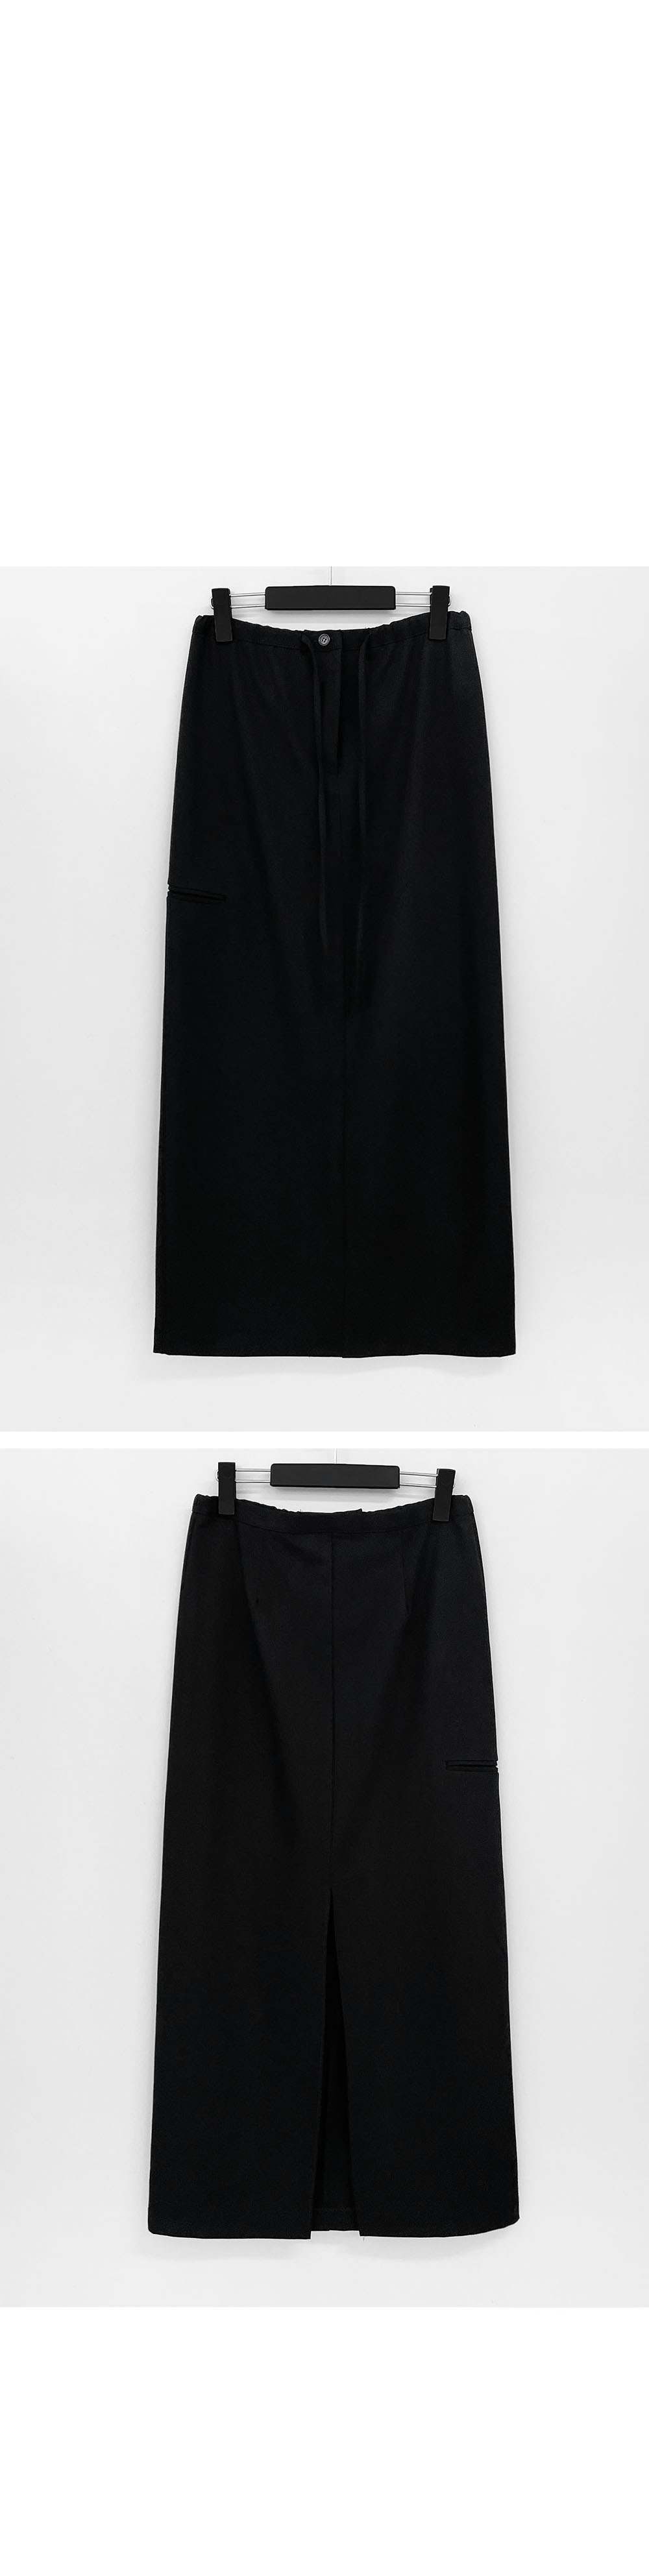 skirt charcoal color image-S1L9